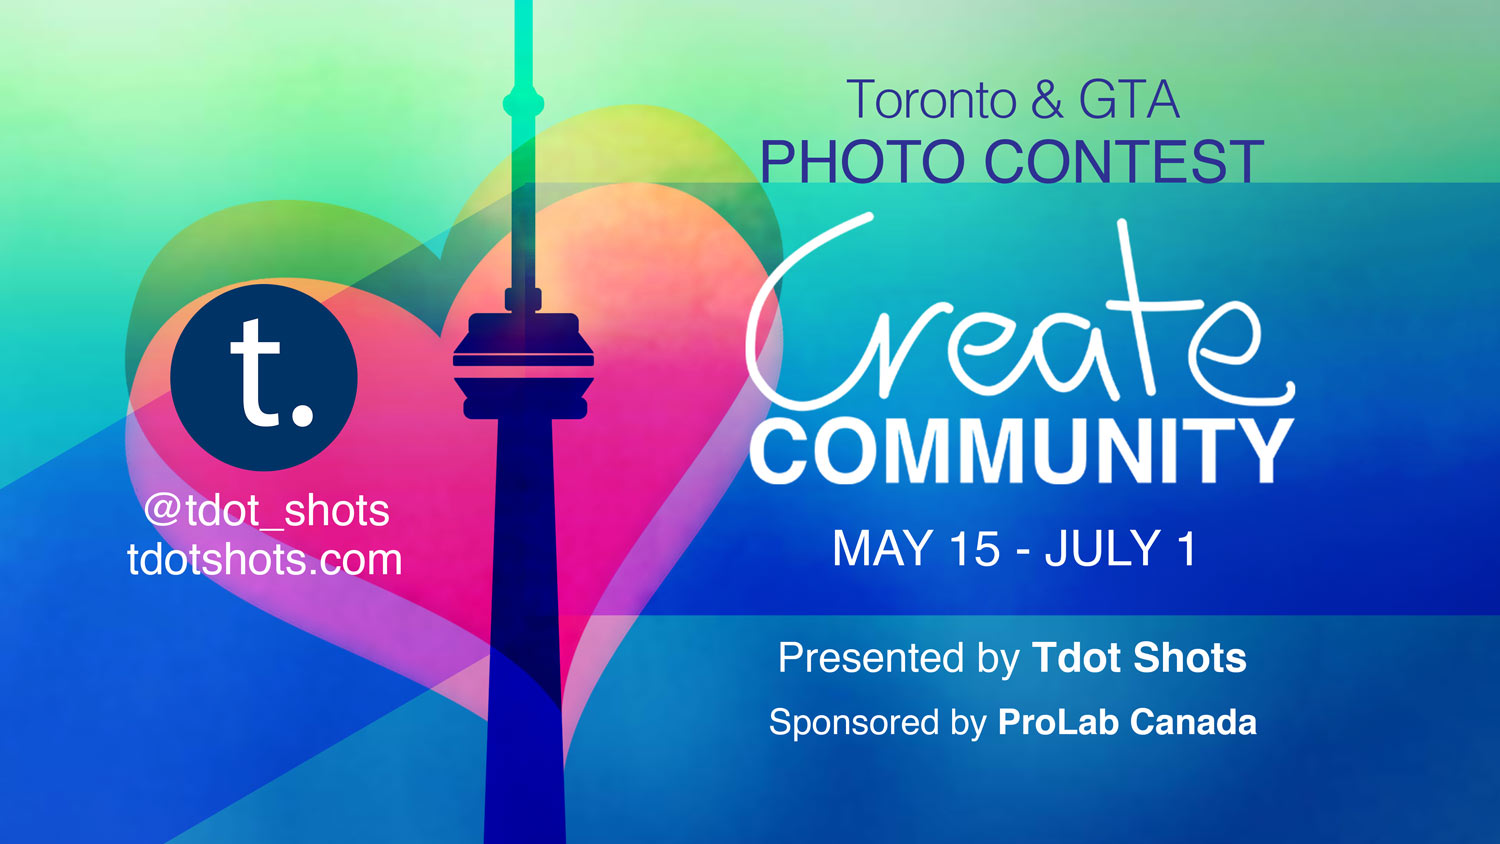 Tdot Shots Create Community Photo Contest 2020 (Toronto, GTA, Golden Horseshoe)